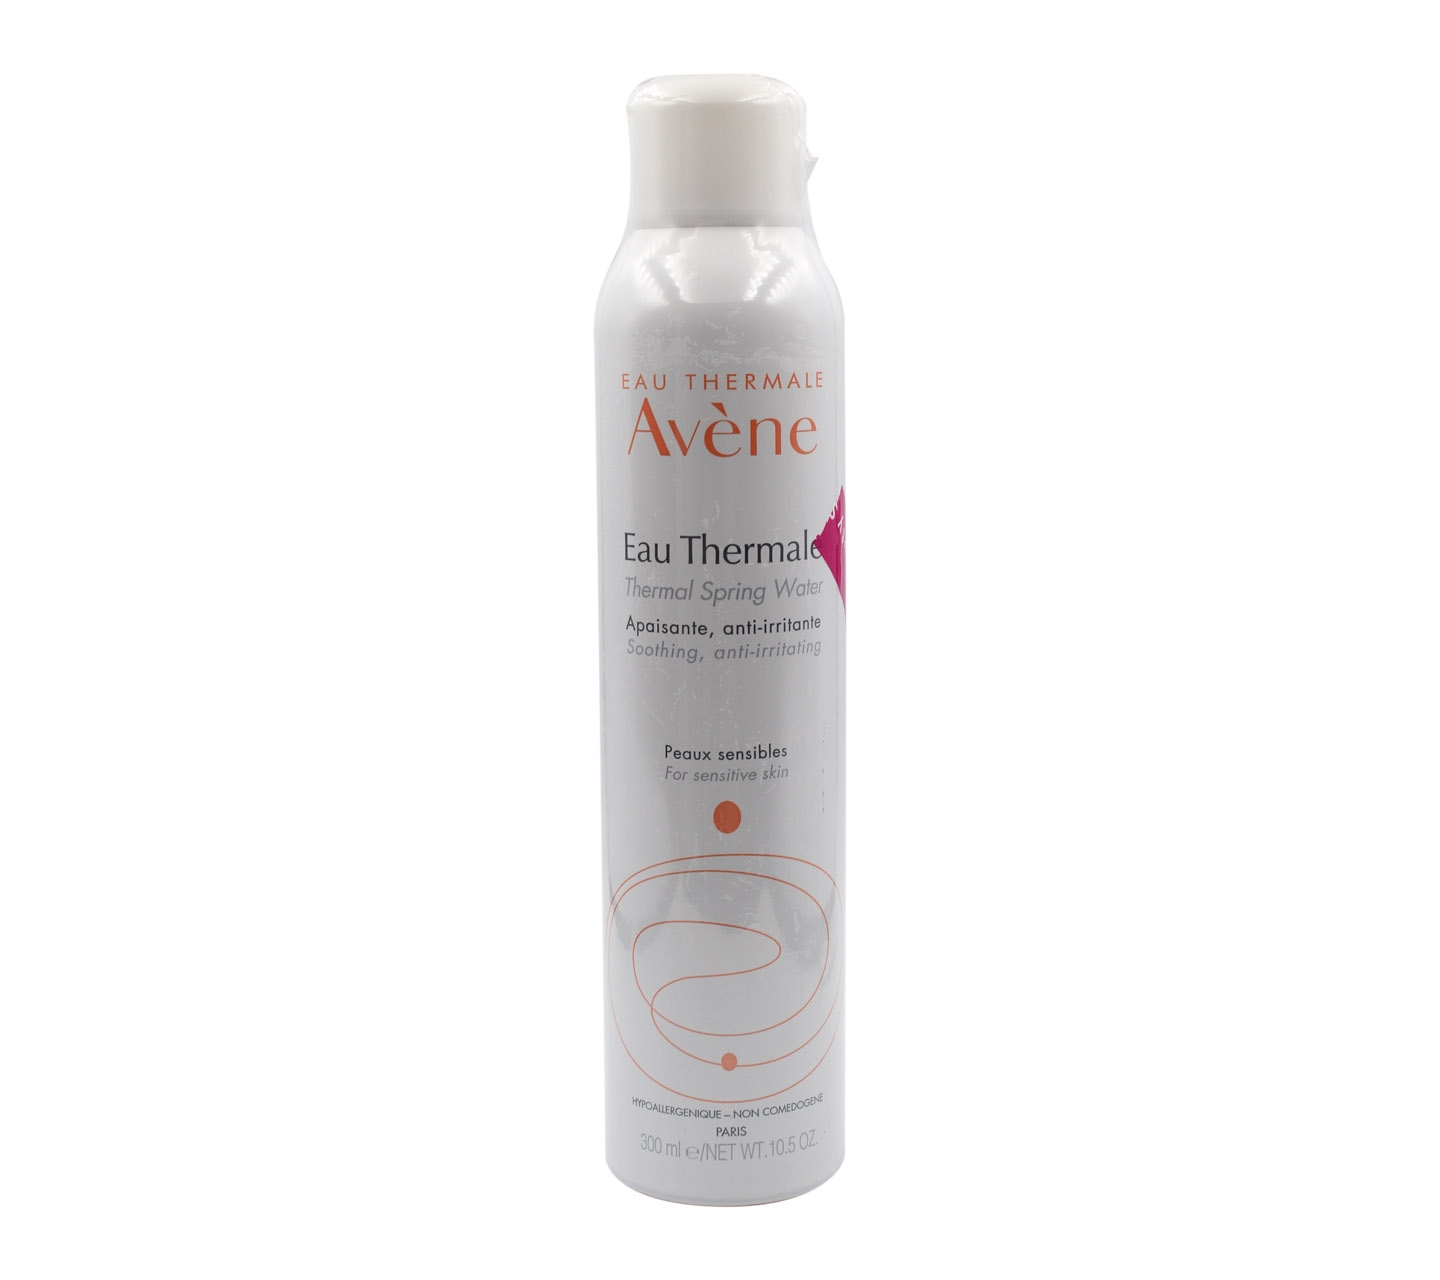 Avene Thermal Spring Water Soothing, Anti Irritating For Senditive Skin